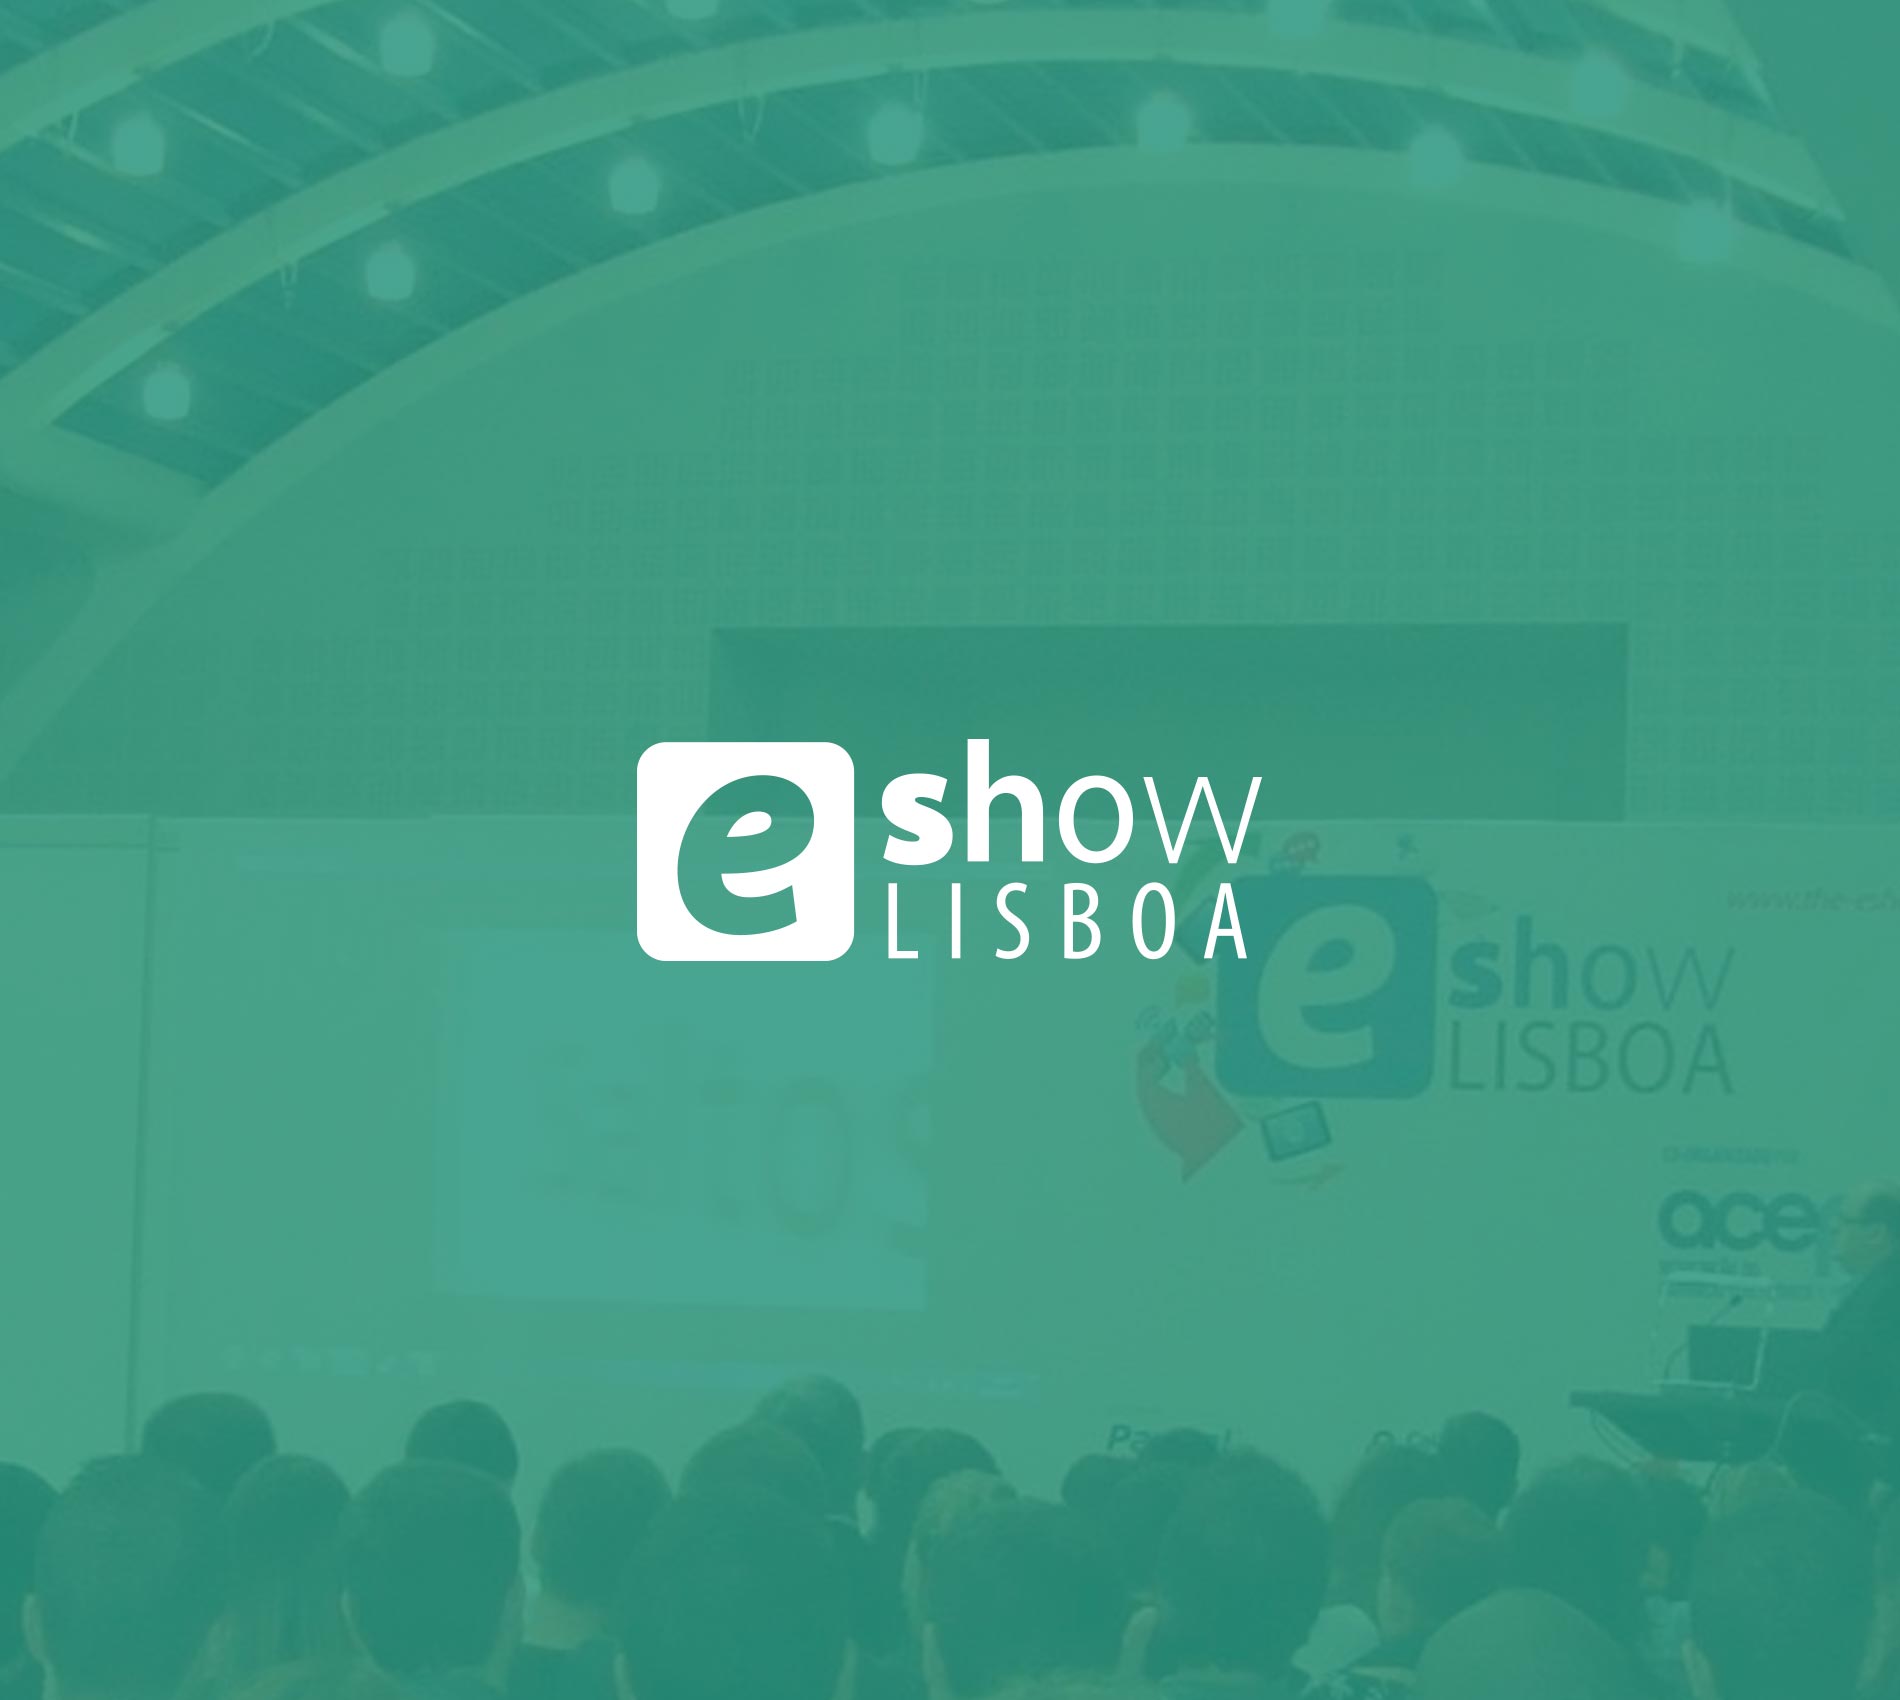 E-show 2013, Lisbon